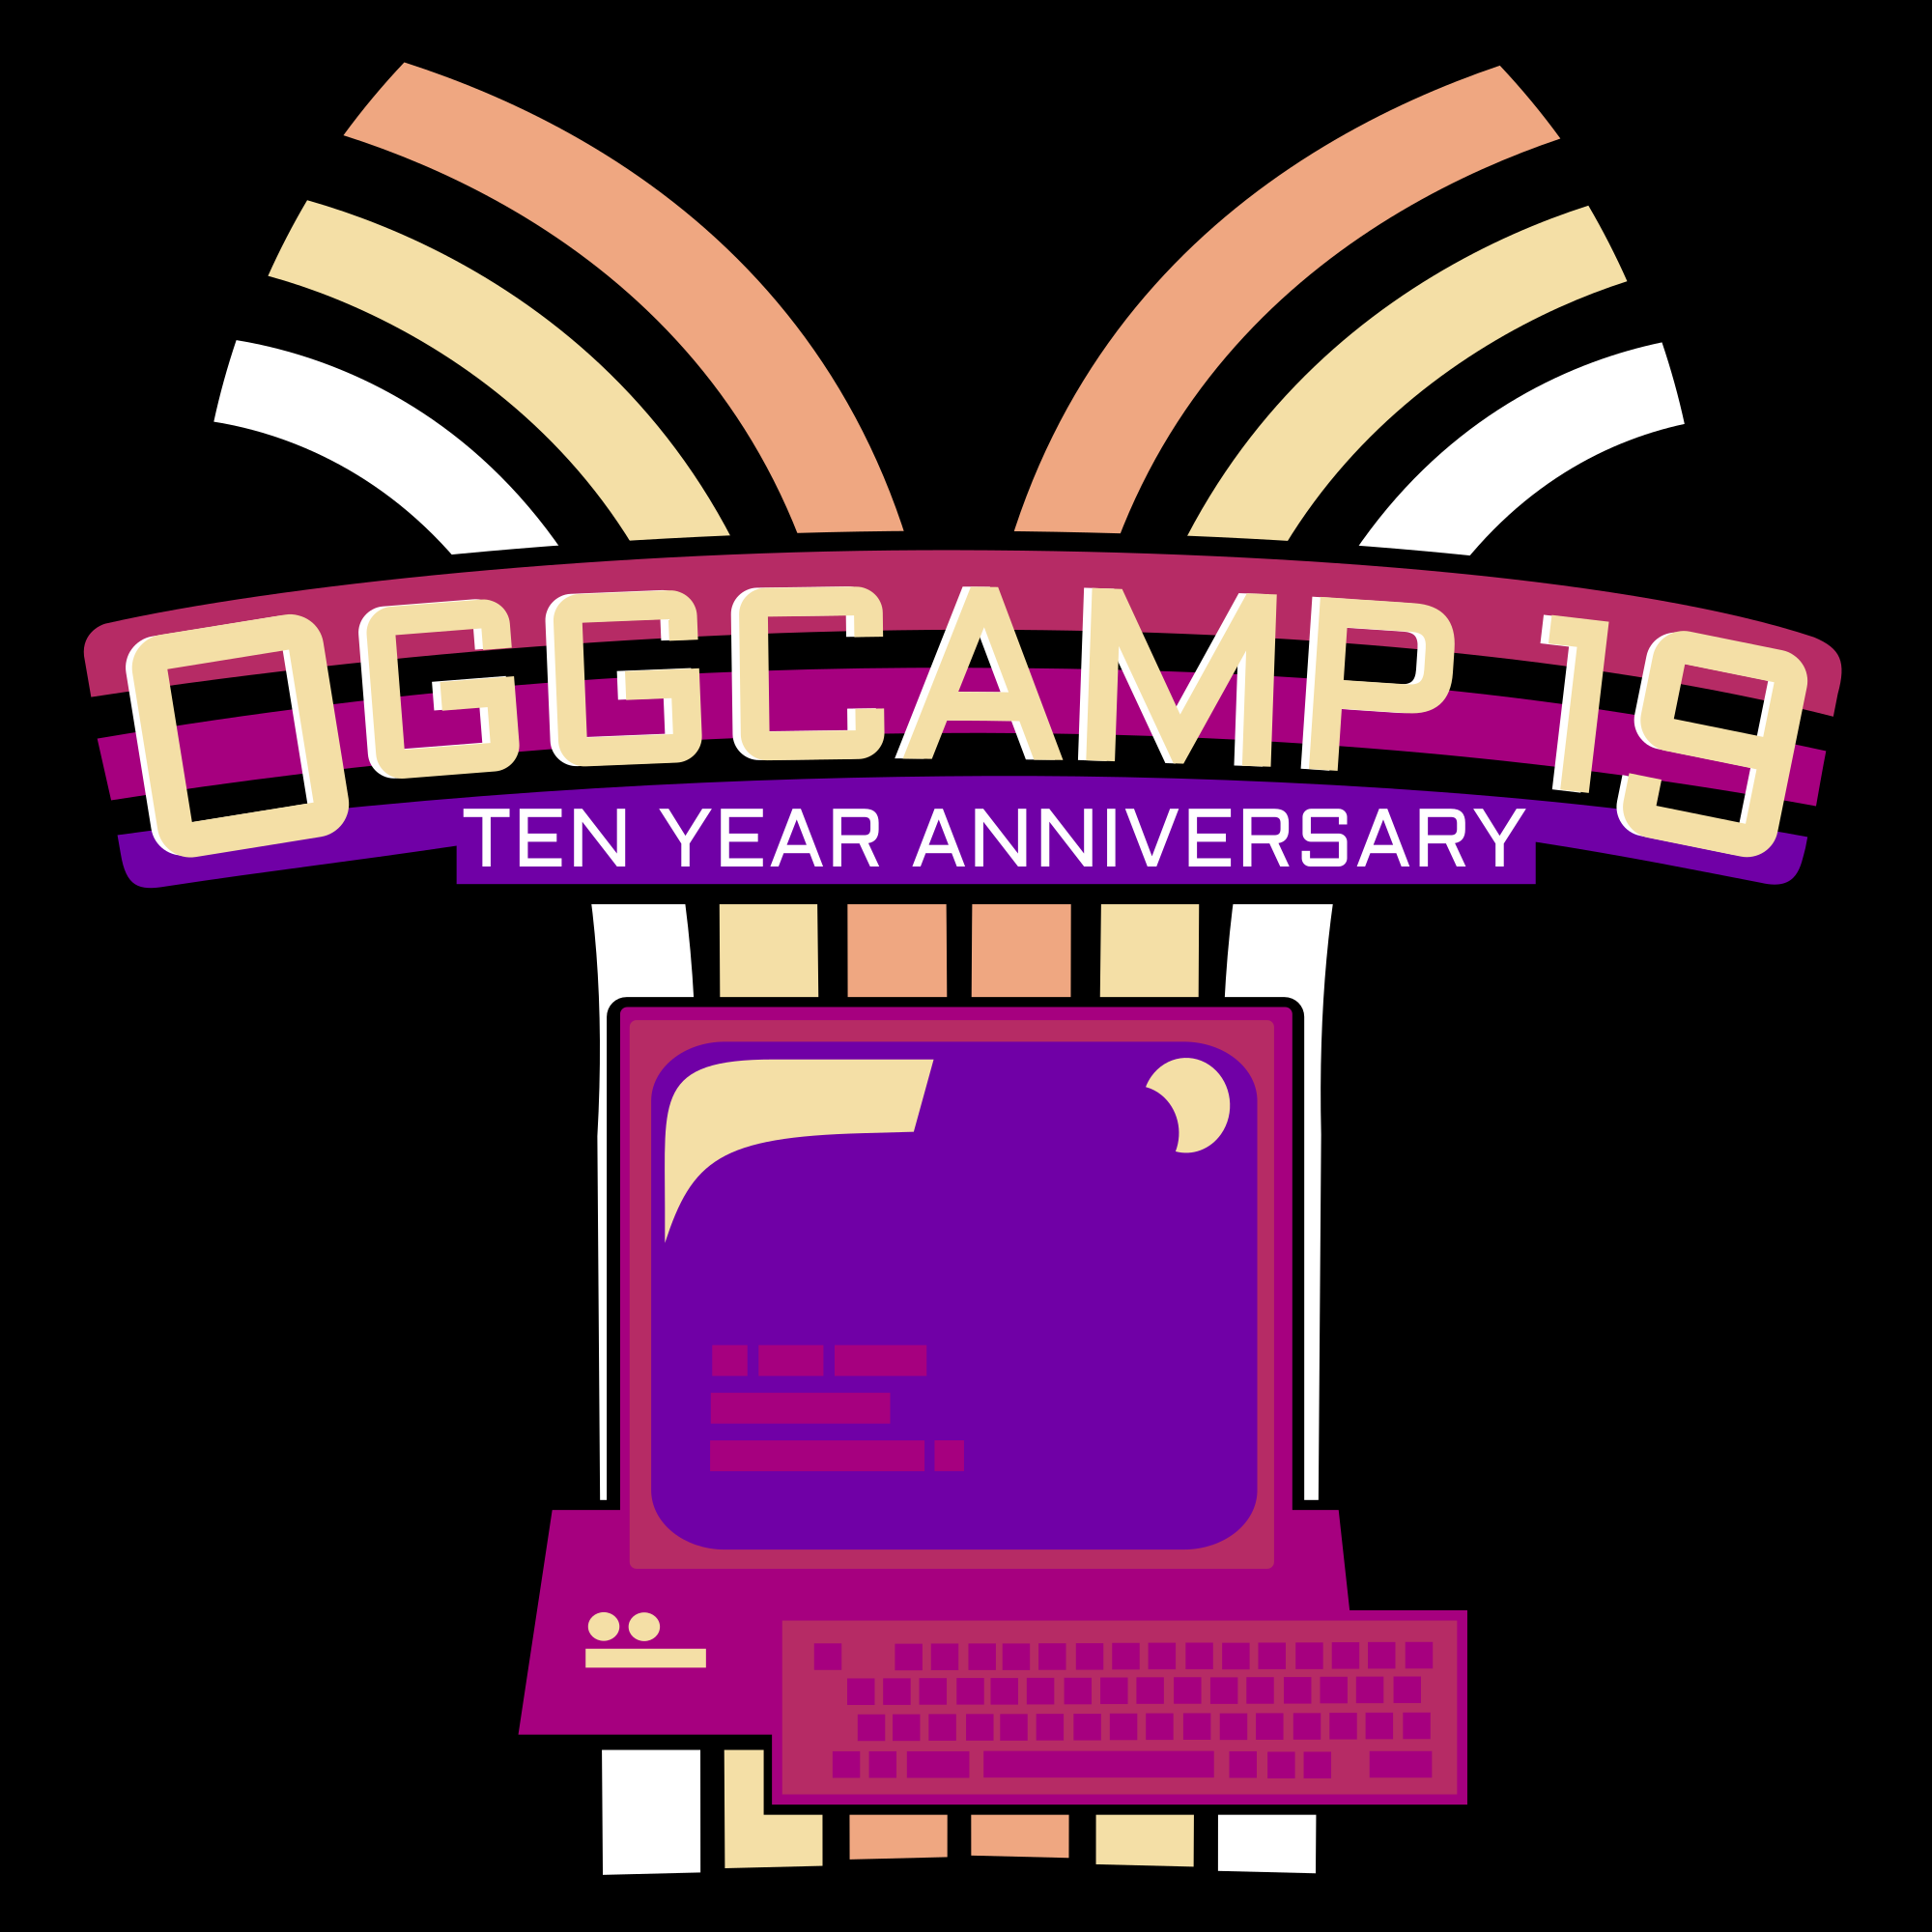 OggCamp